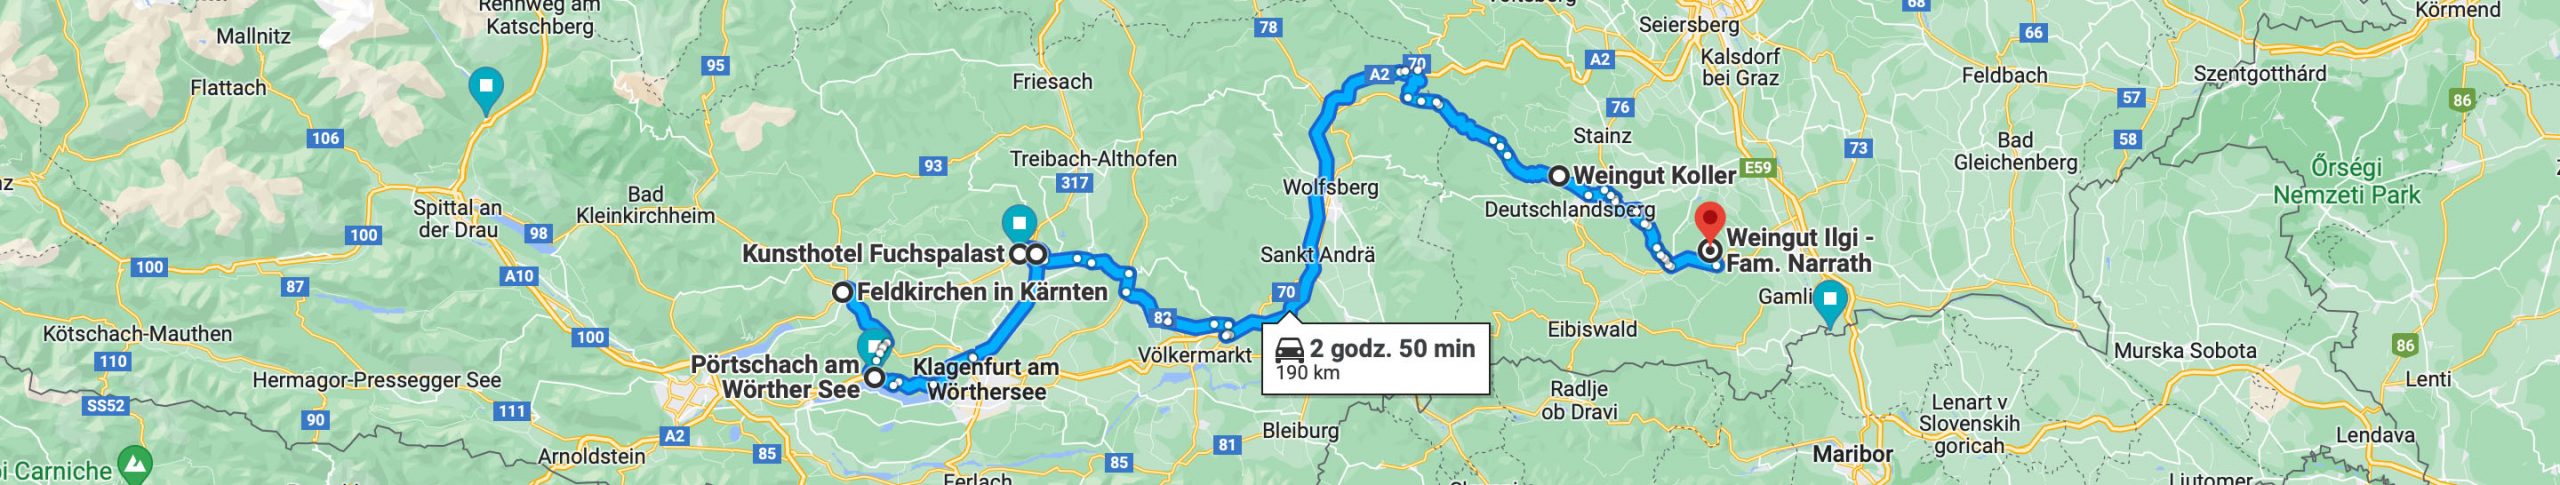 Trasa: Feldkirchen - Wörthersee - Winnice Taggenbrunn, Koller i Ilgi - Brudersegg